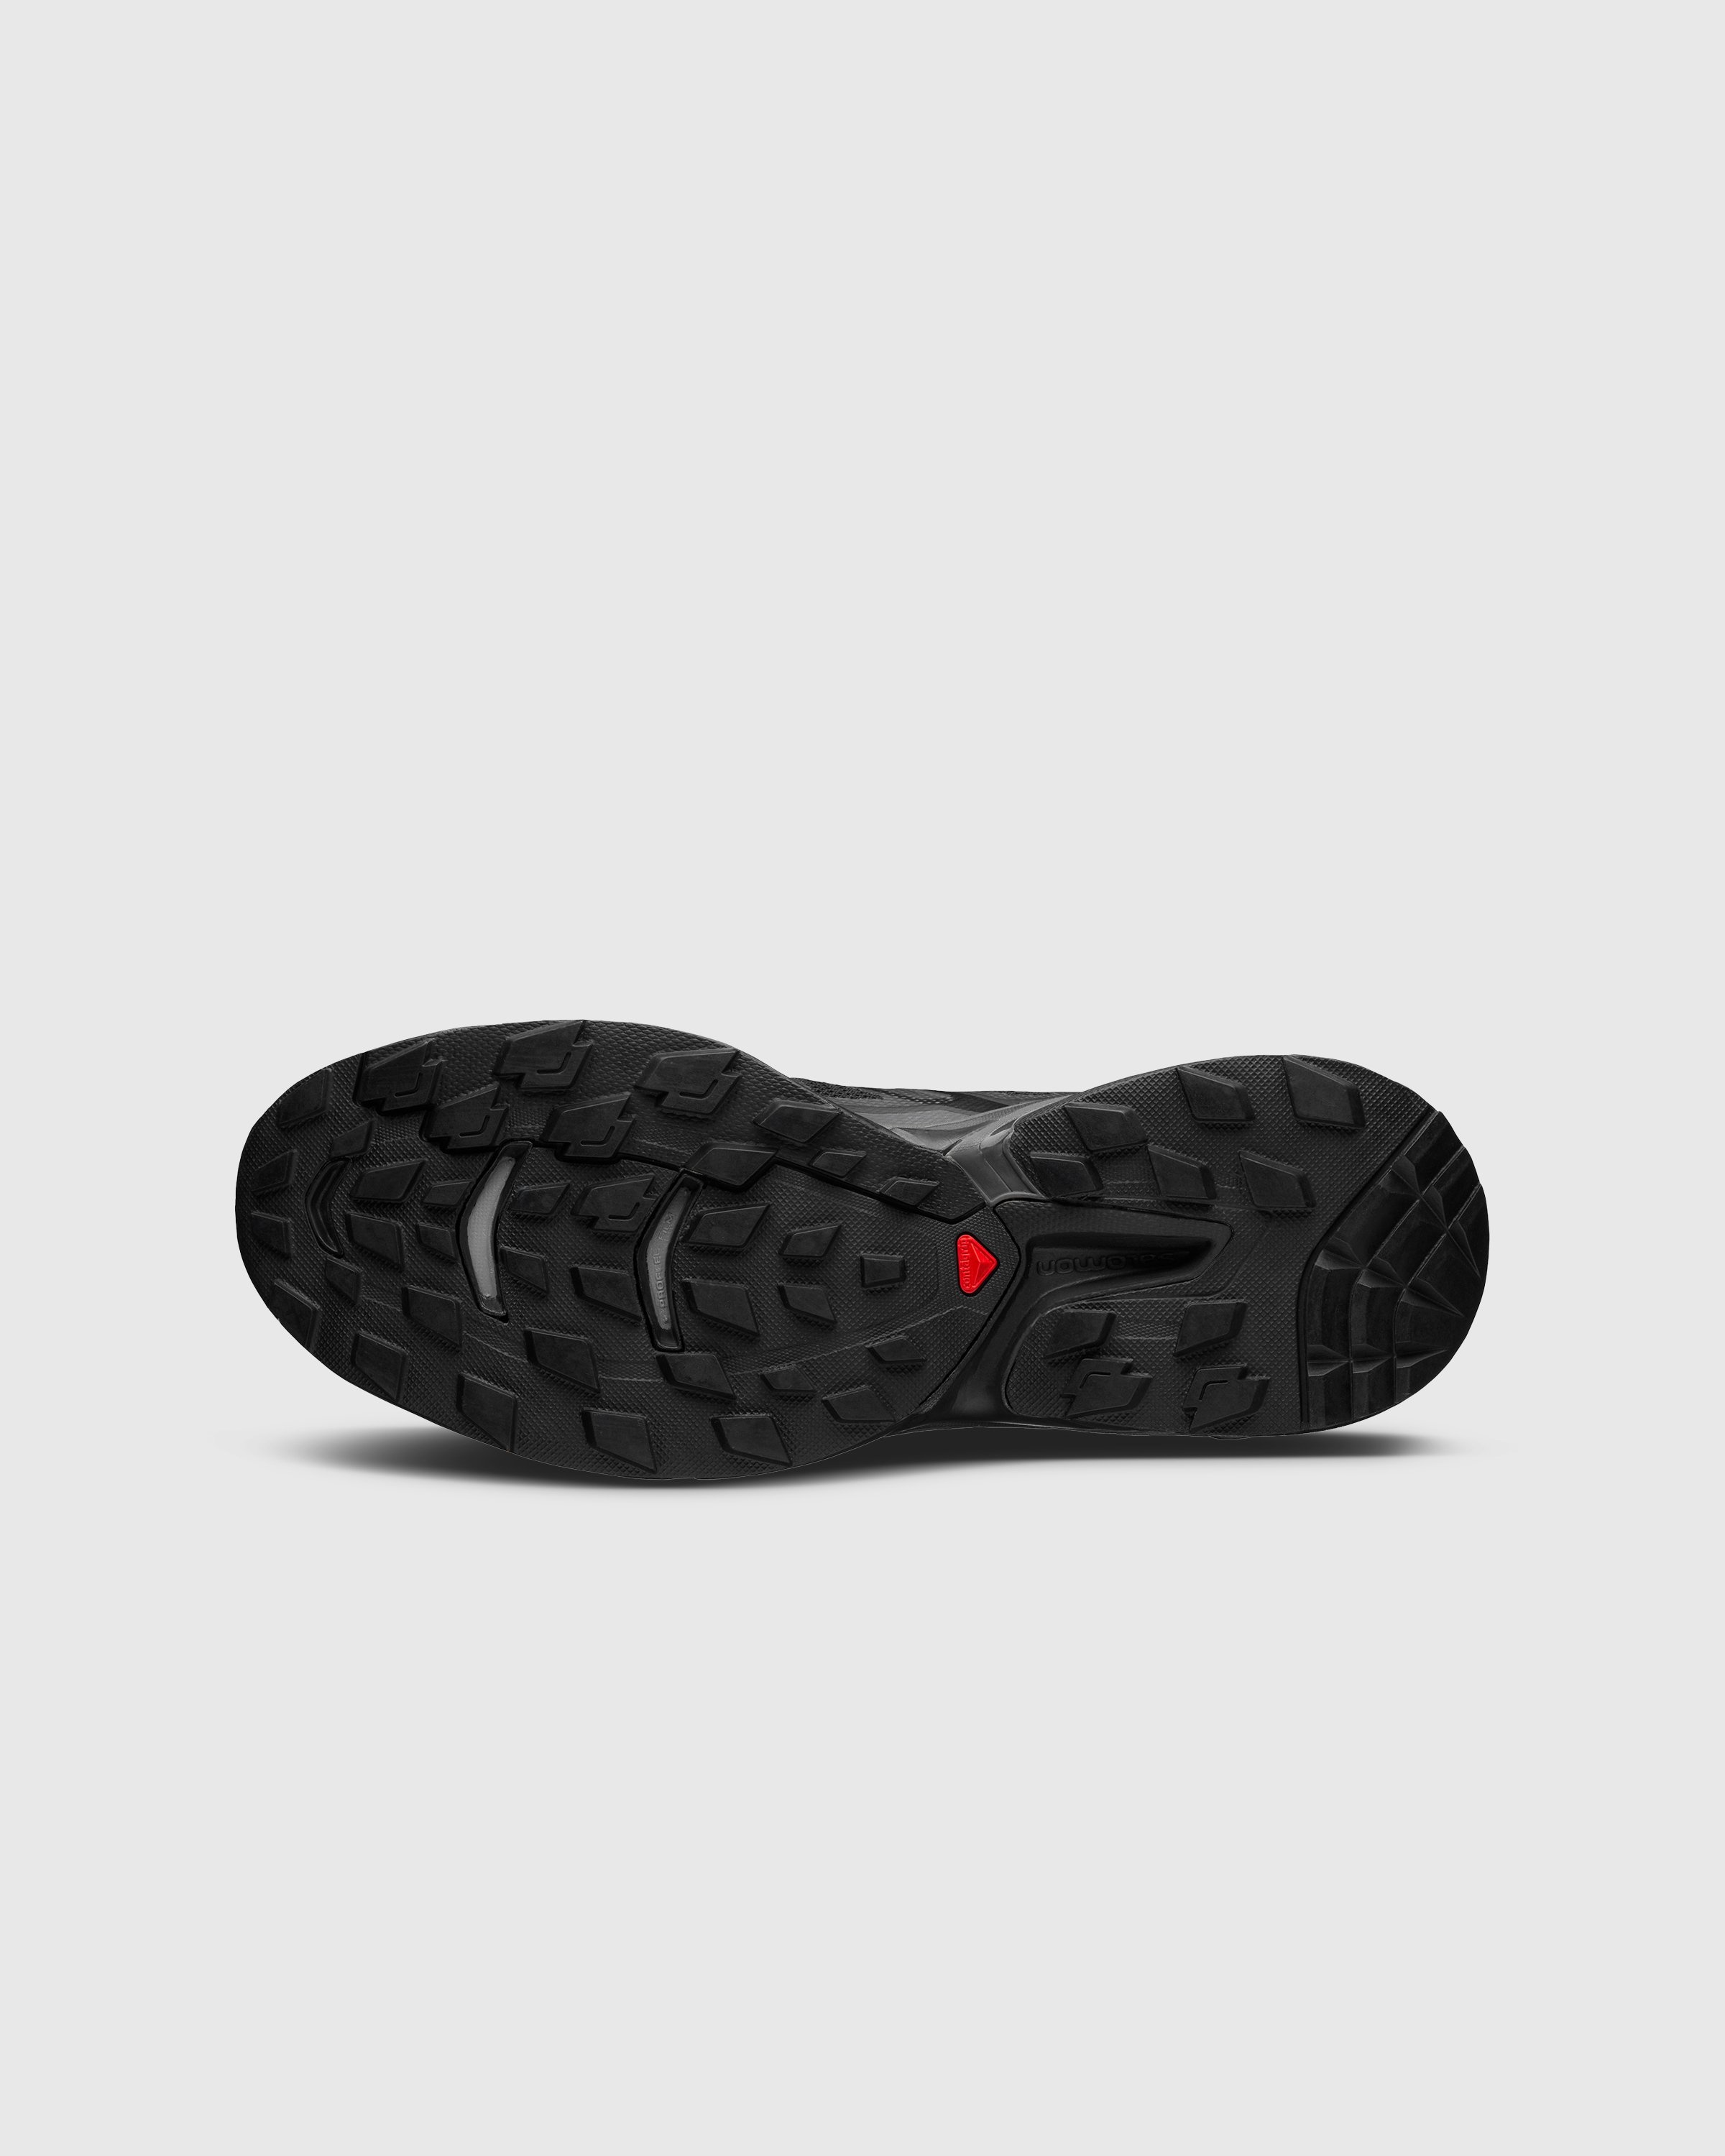 Salomon – XT-Wings 2 Advanced Black/Black/Magnet - Low Top Sneakers - Black - Image 5